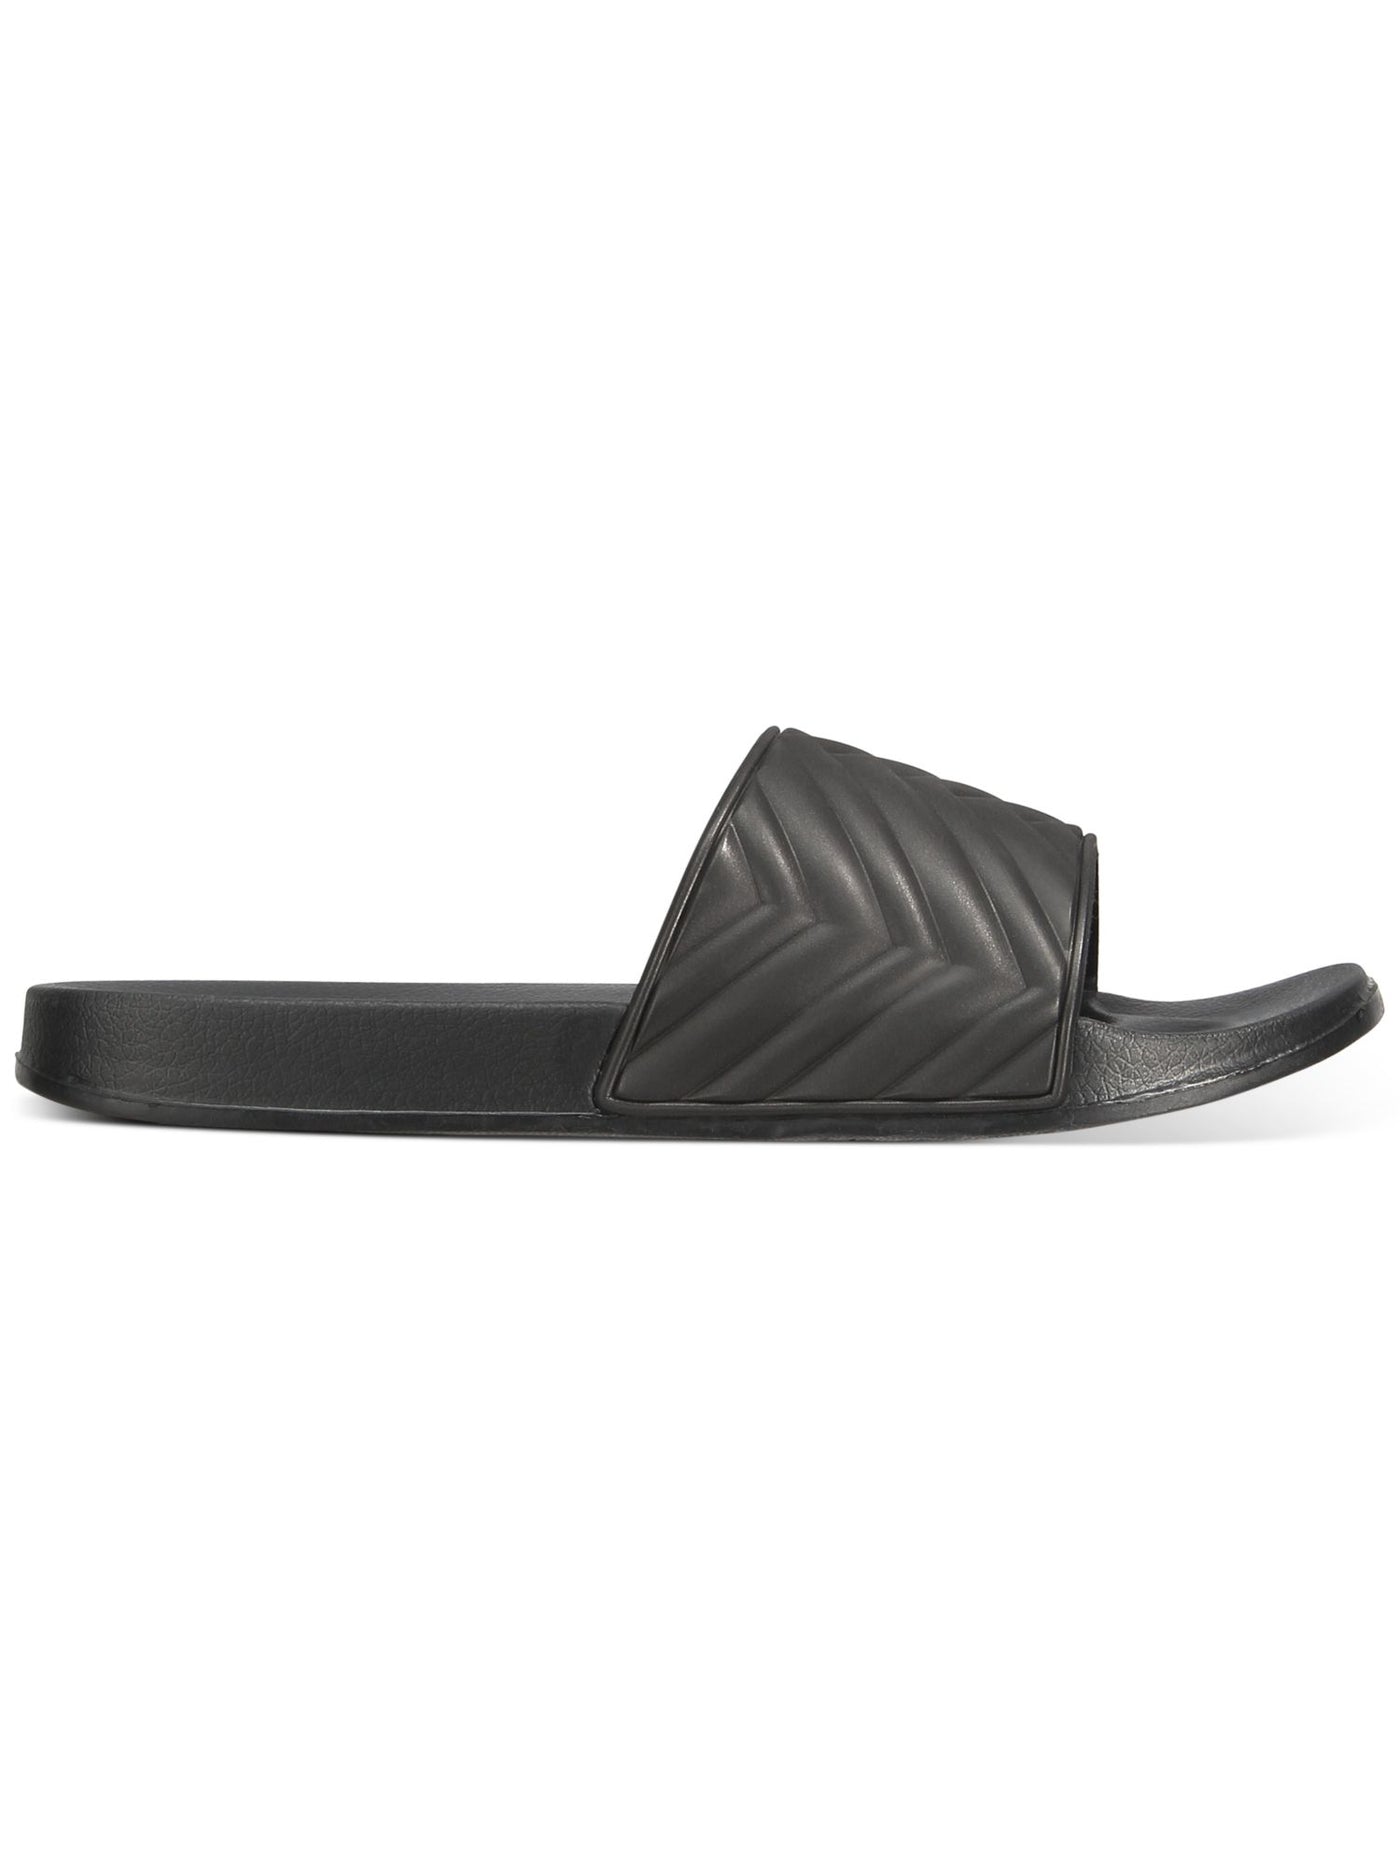 INC Mens Black Quilted Xander Open Toe Slip On Slide Sandals Shoes 9 M